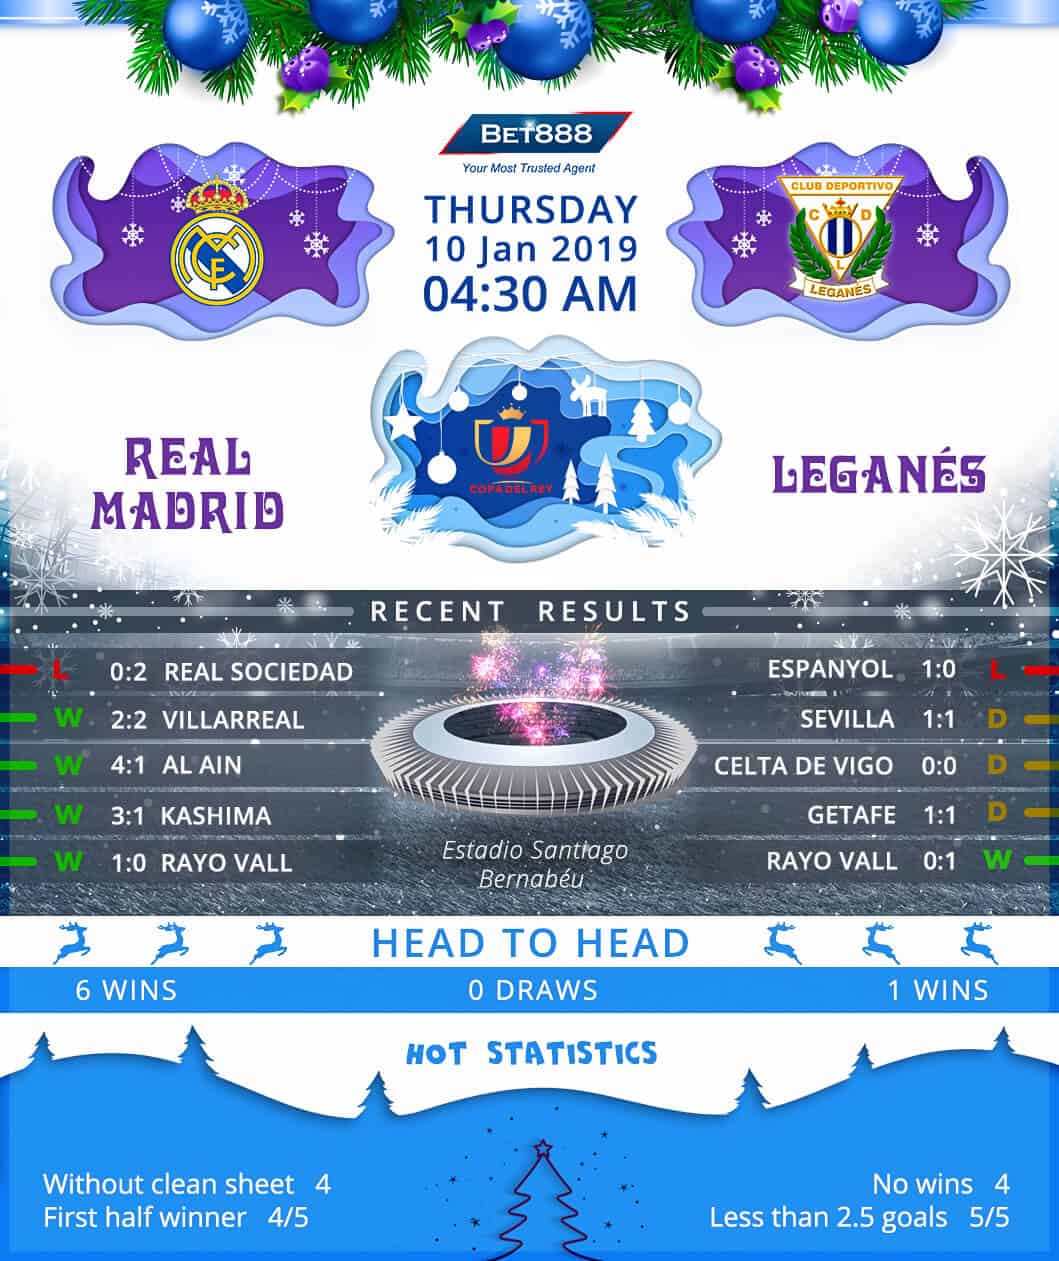 Real Madrid vs Leganes 10/01/19